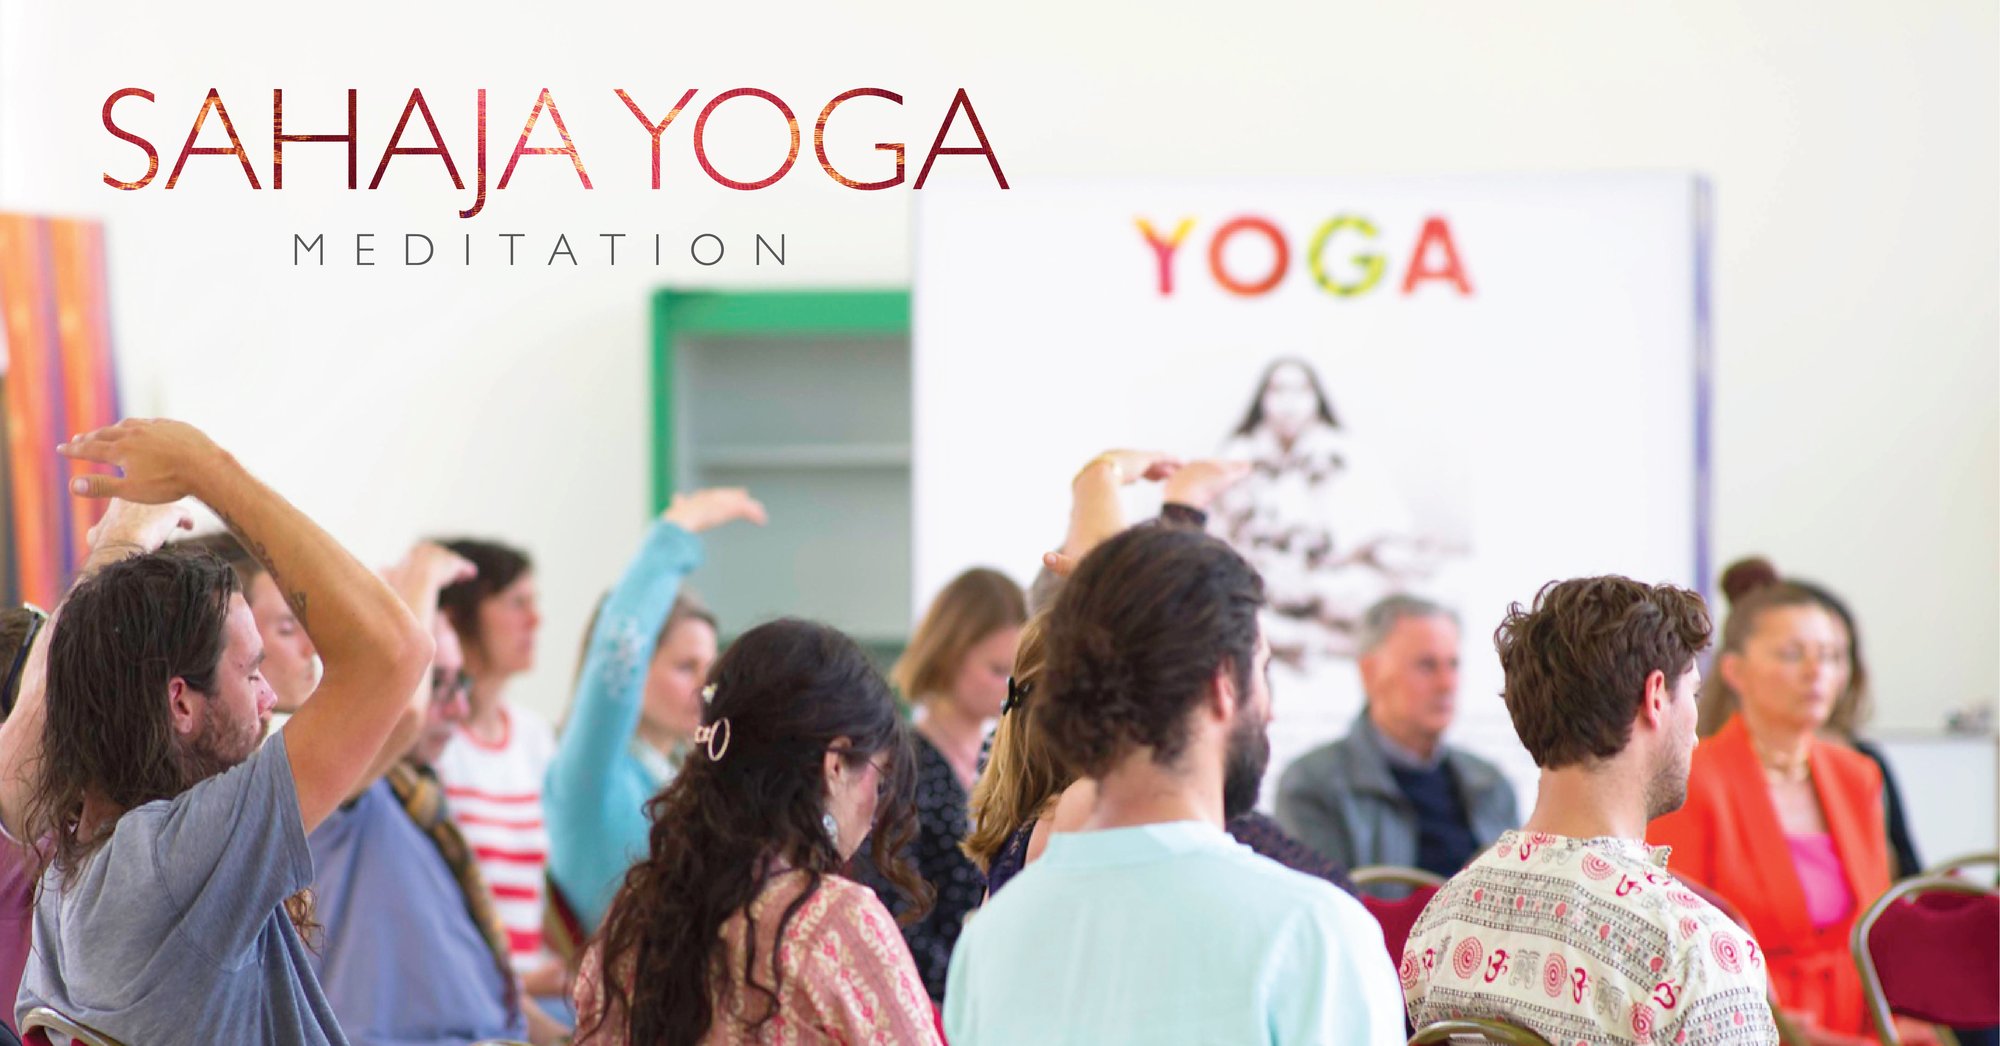 Sahaja Yoga event banner-06